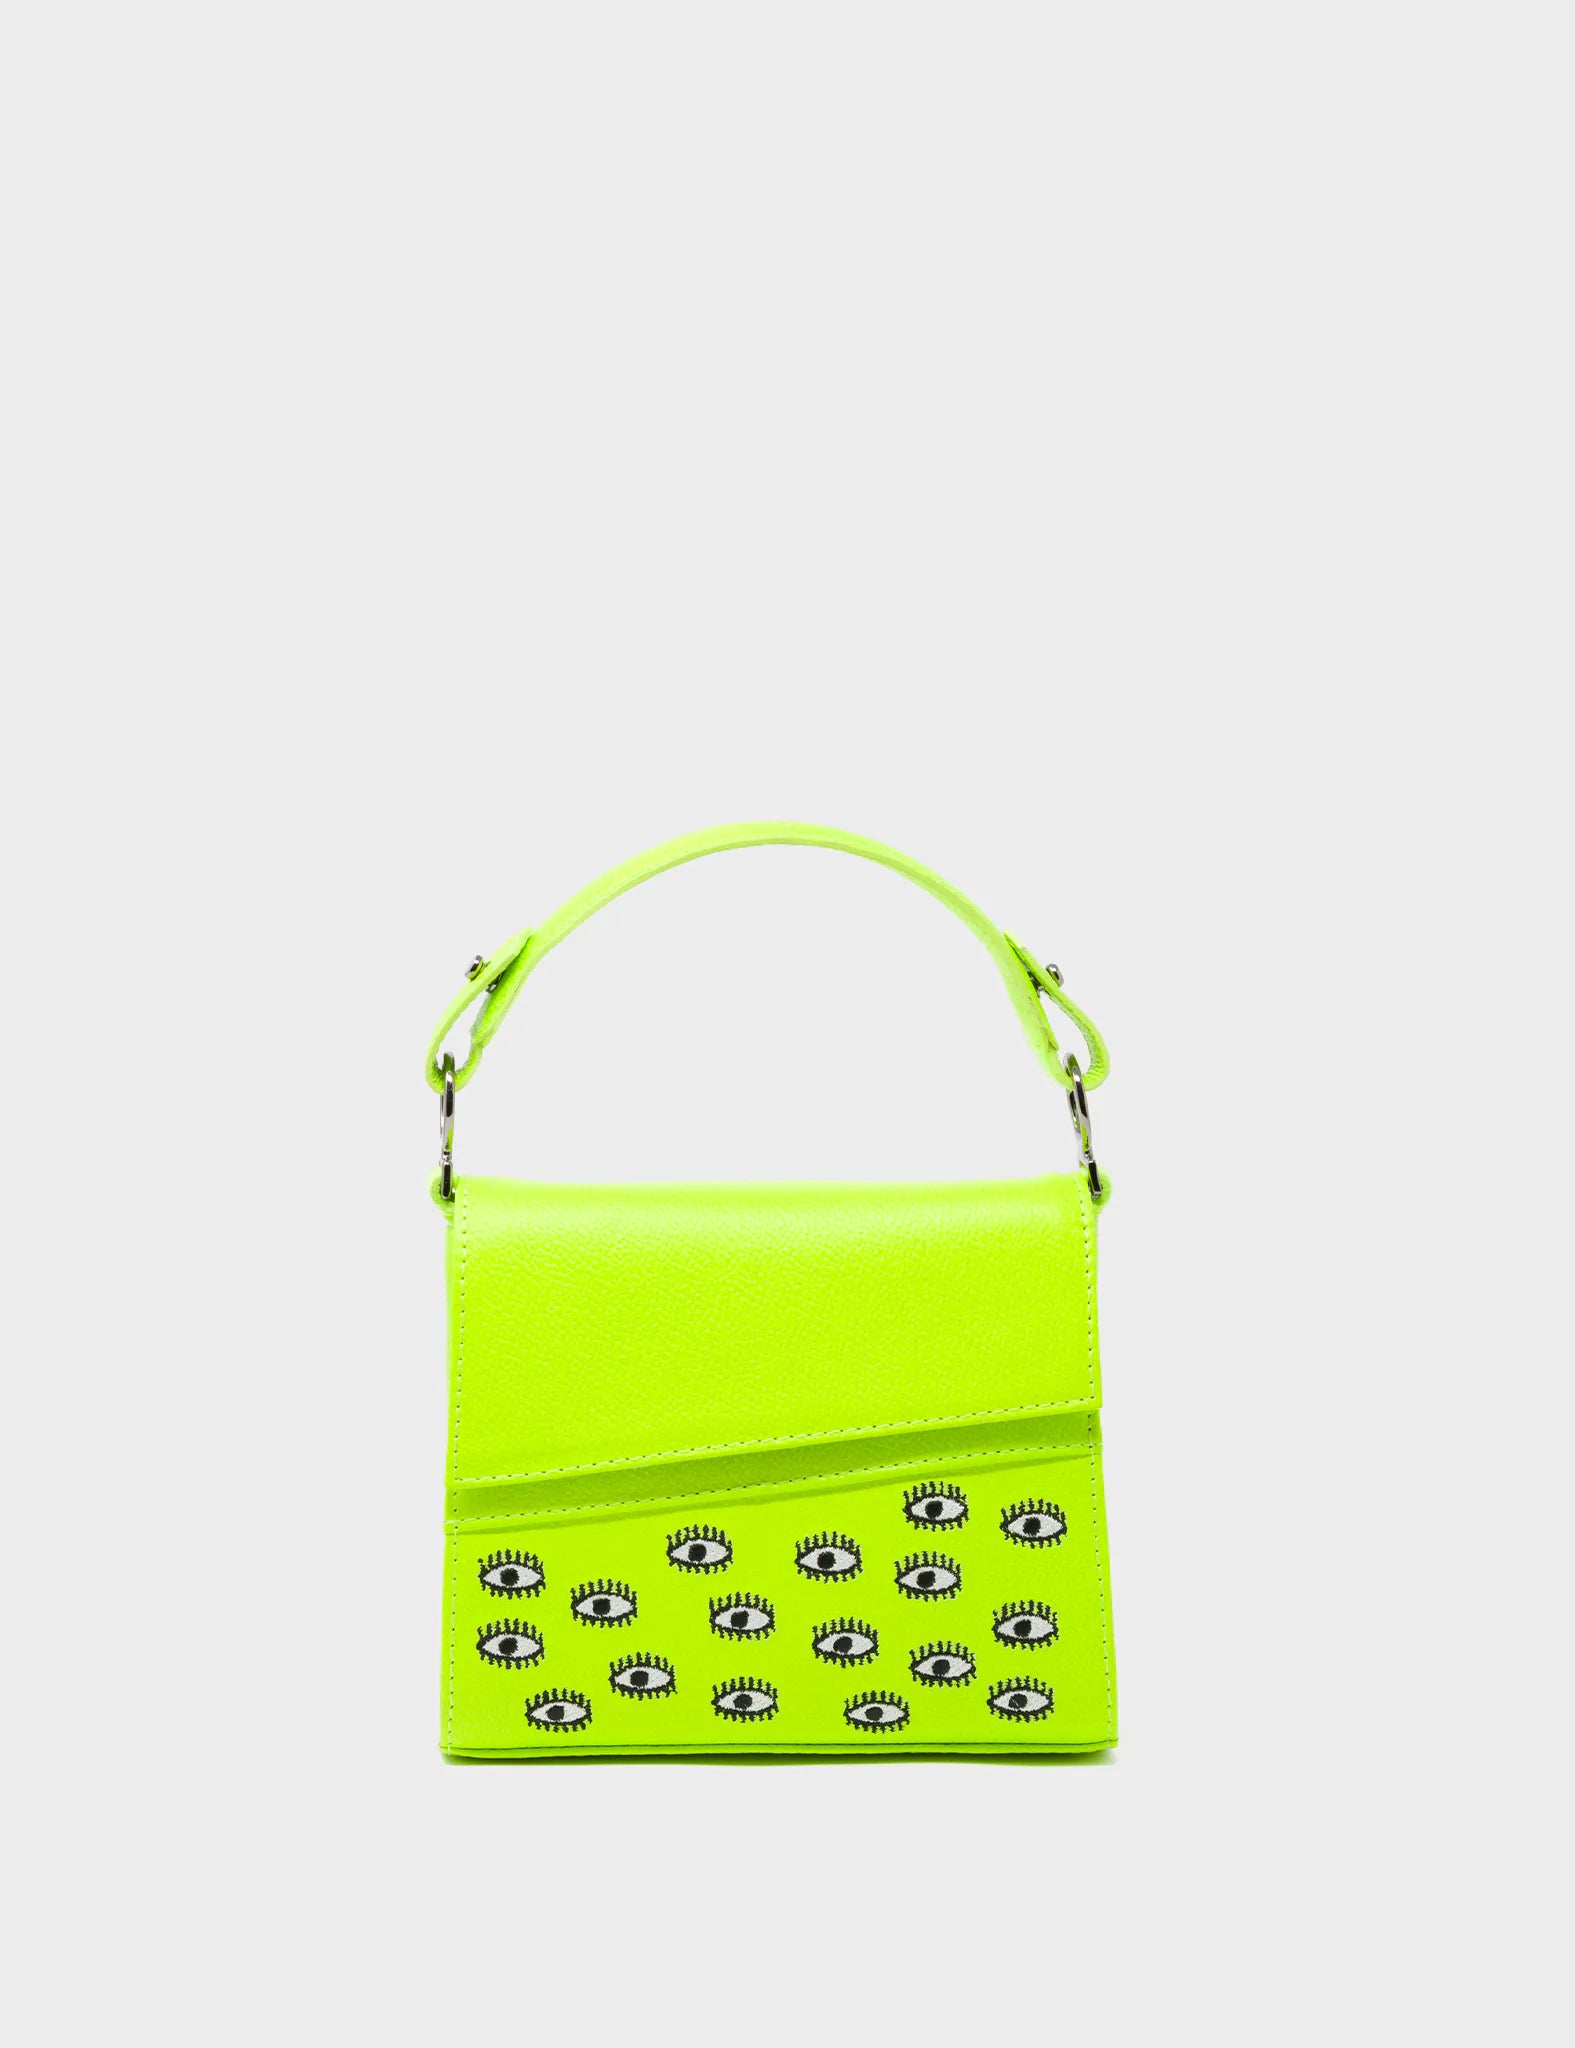 Anastasio Micro Crossbody Handbag Neon Yellow Leather - Eyes Embroidery - Front